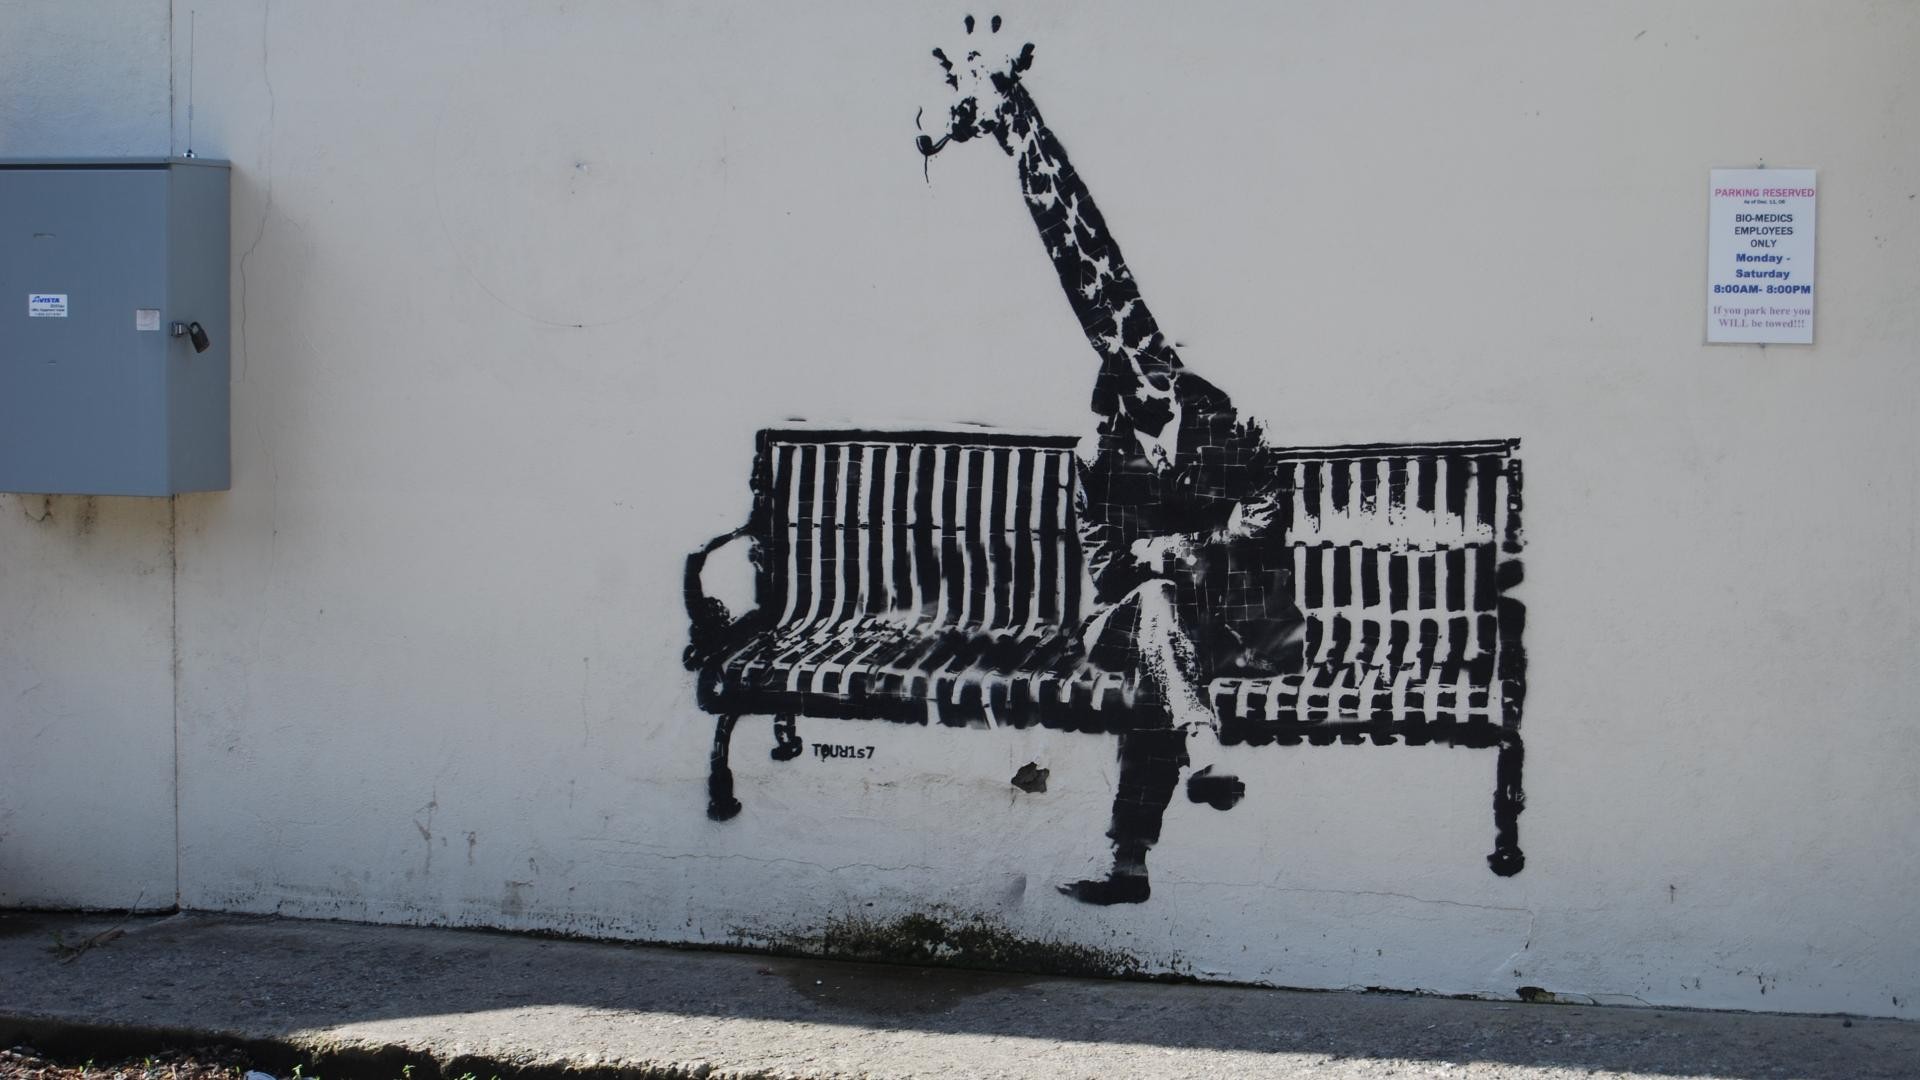 Artwork Animals Graffiti Wall Banksy Bench Sitting Legs Giraffes Shadow Street Art 1920x1080